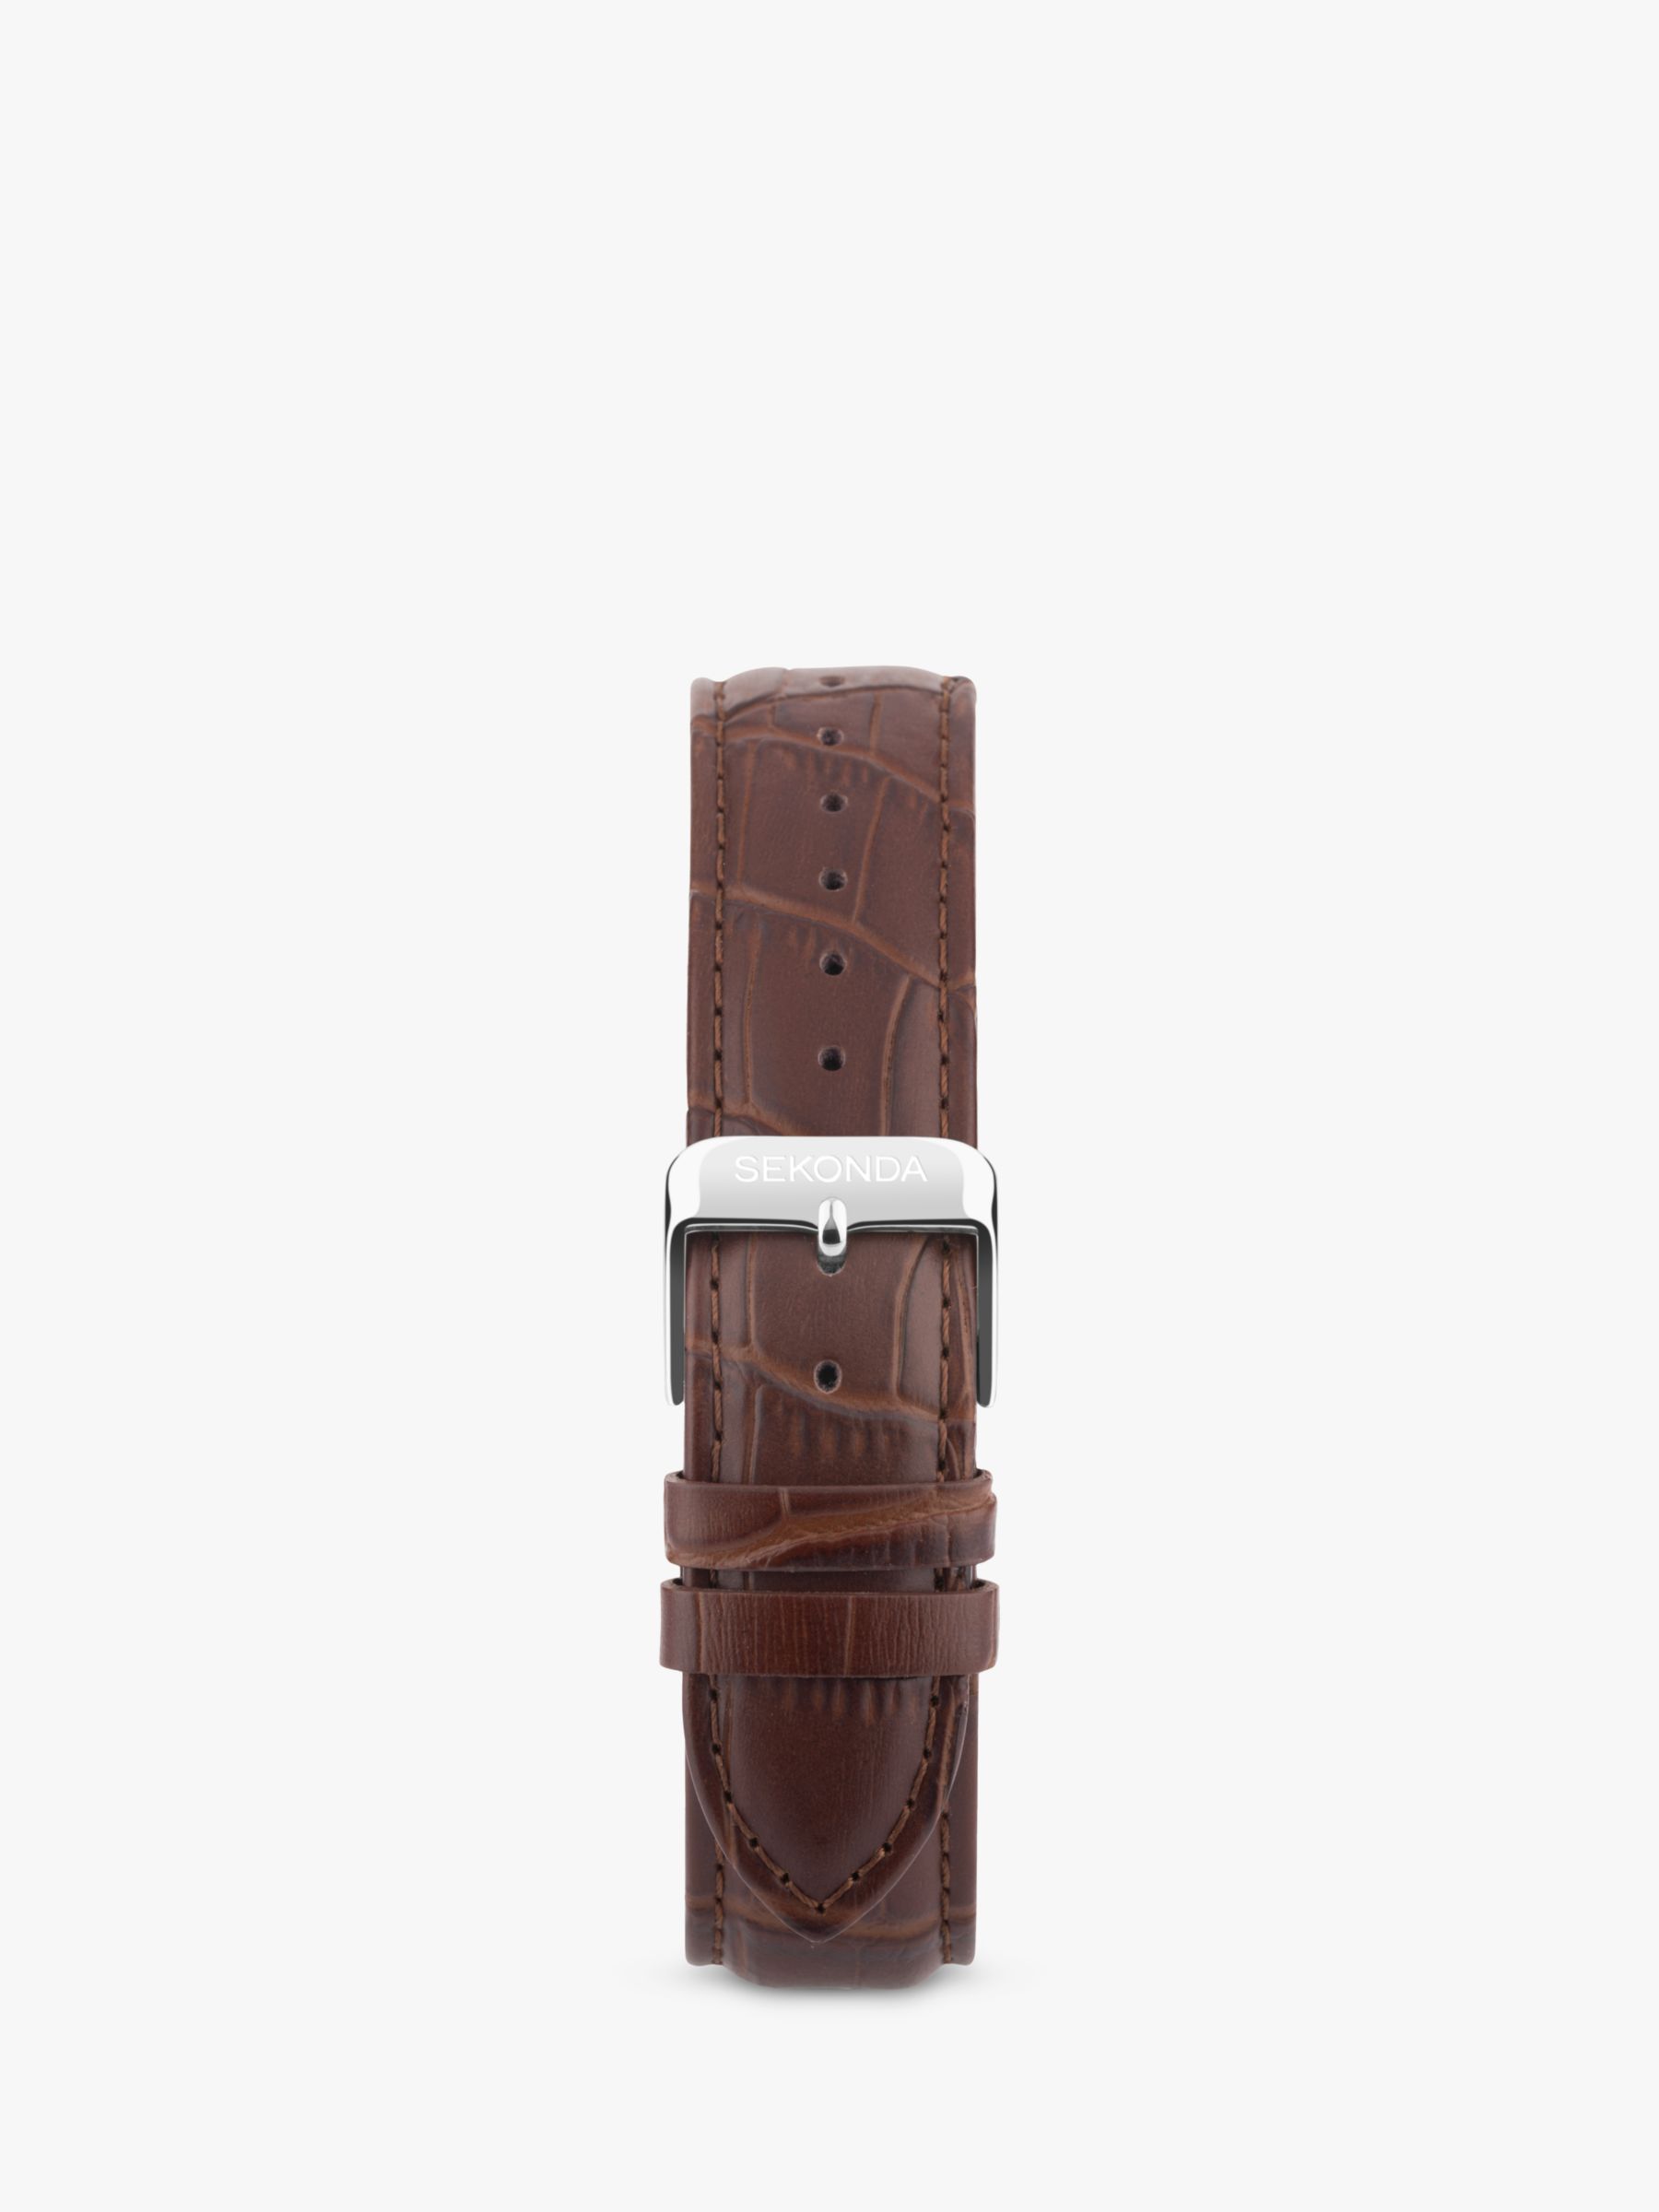 Buy Sekonda 30110 Men's Chronograph Leather Strap Watch, Brown Online at johnlewis.com